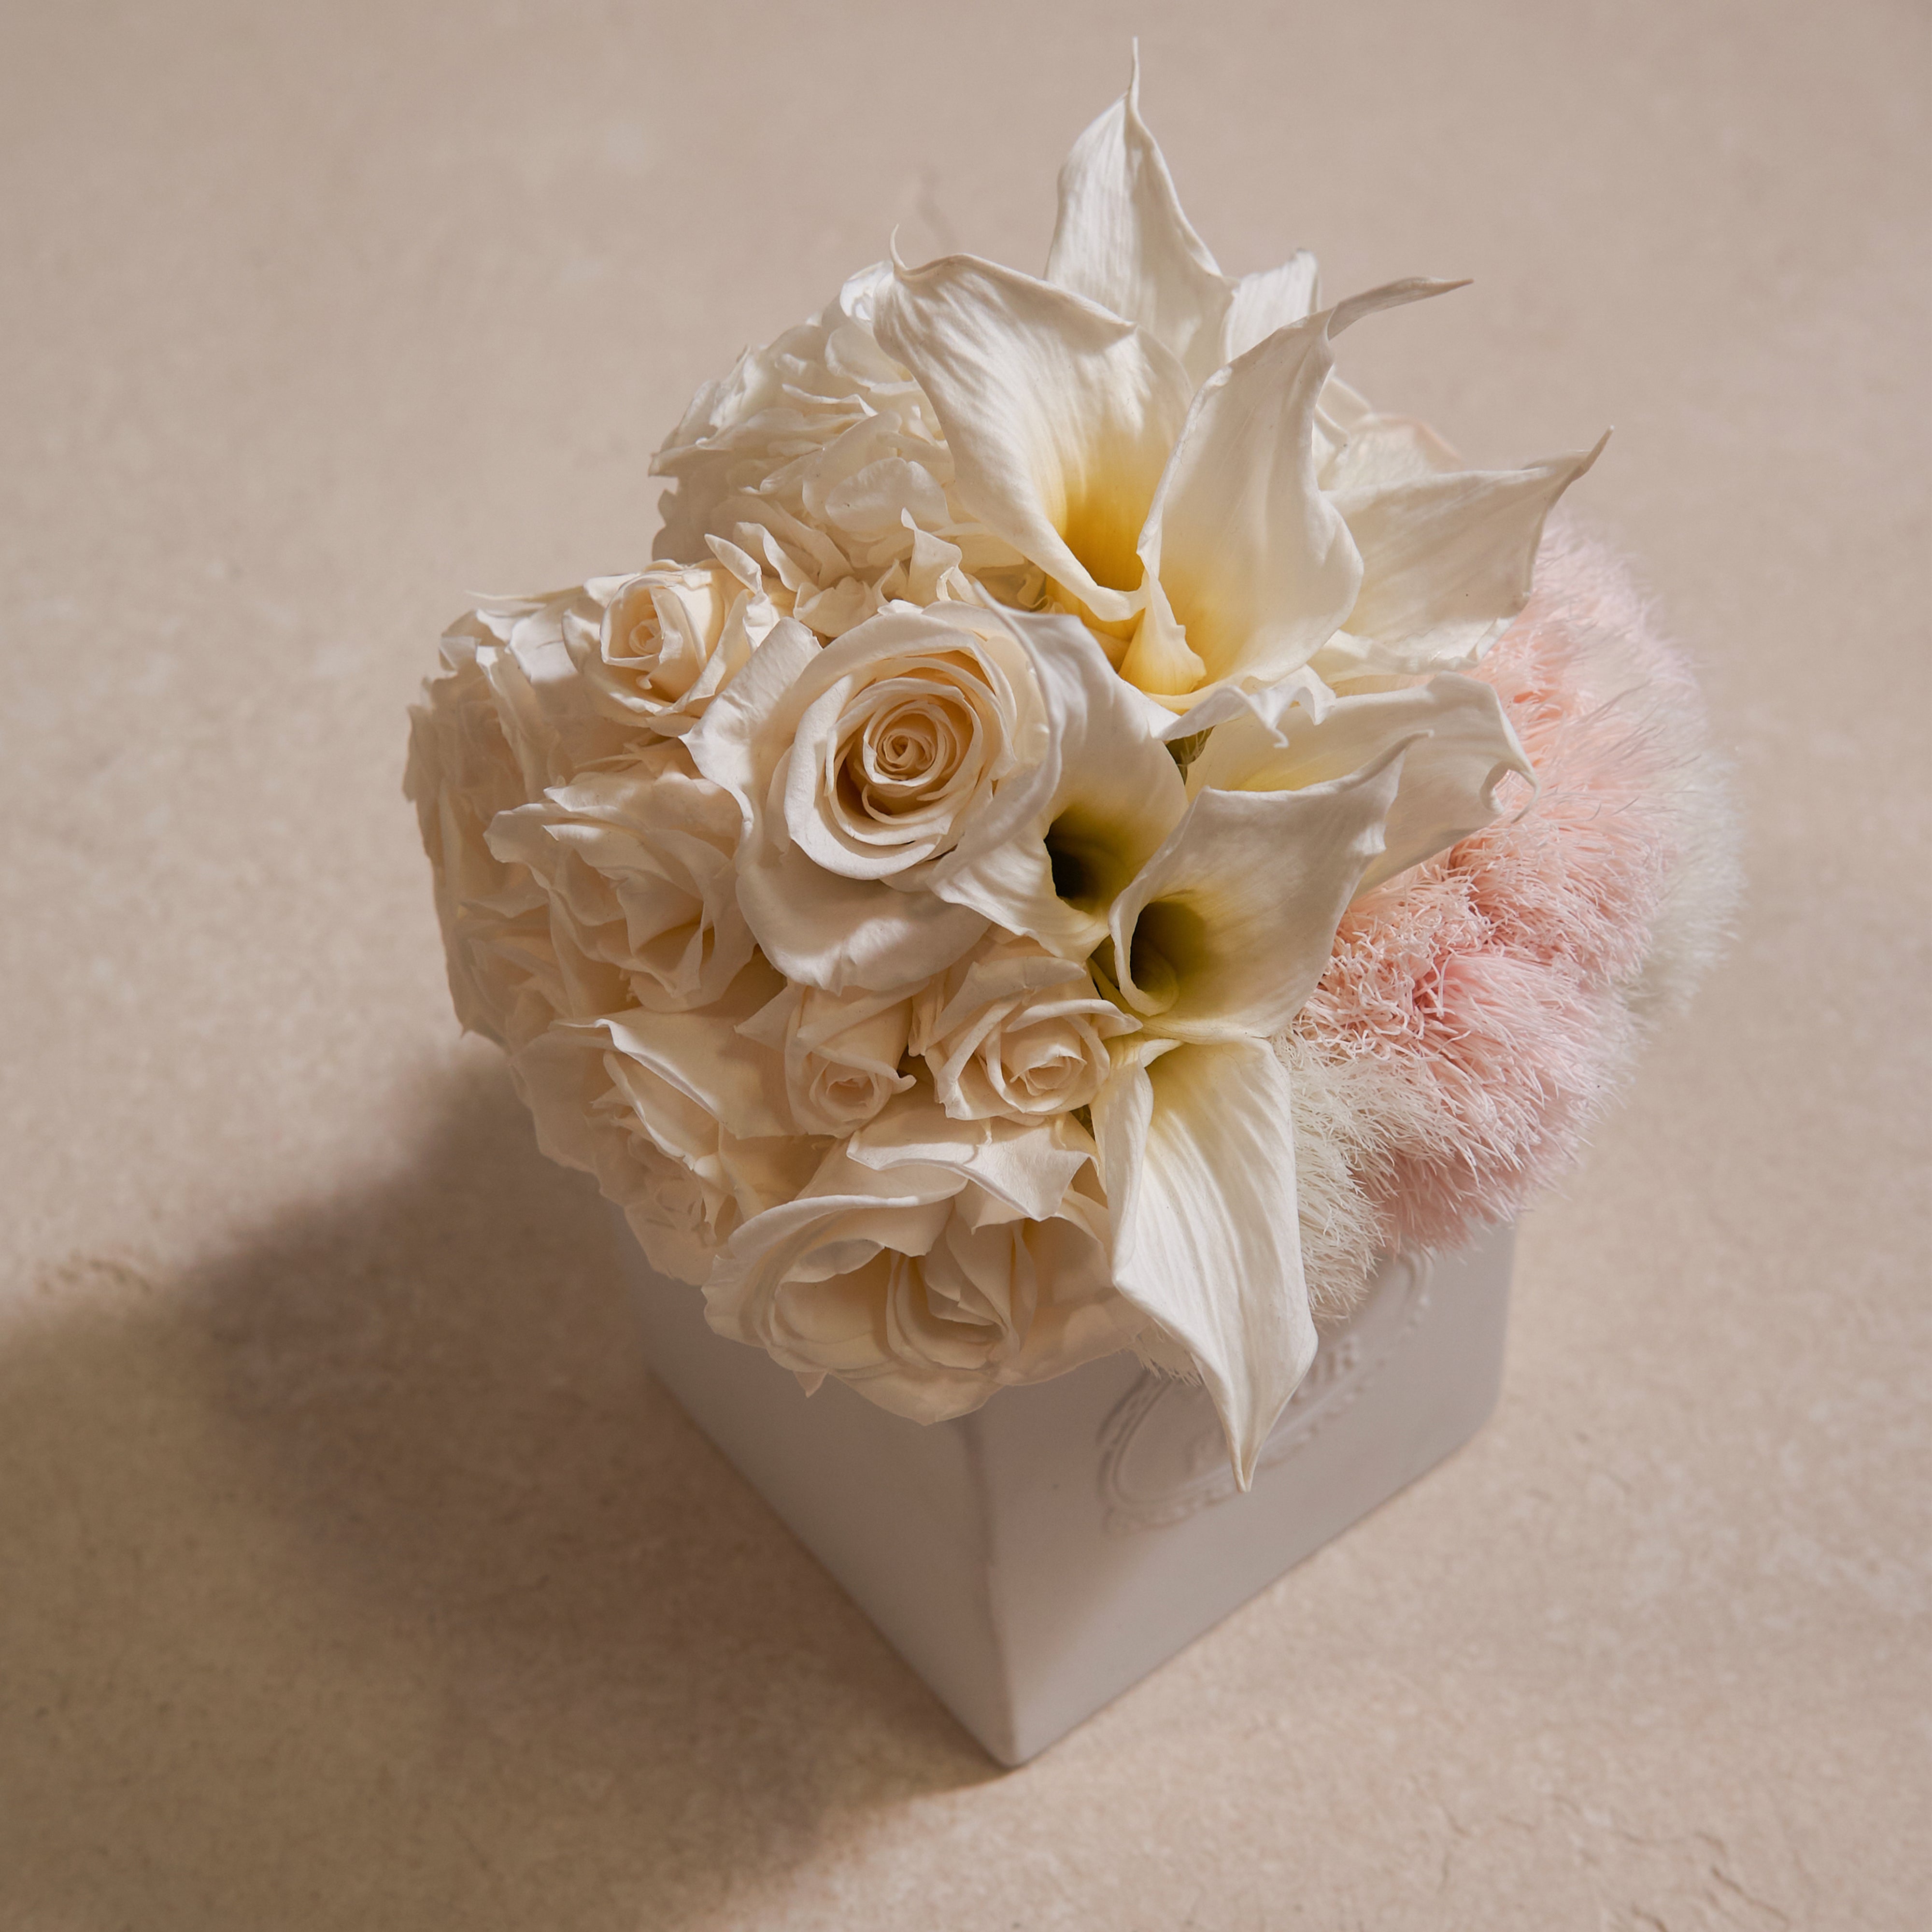 Garden State Plaza Luxury Flower Boutique & Delivery - Venus et Fleur®